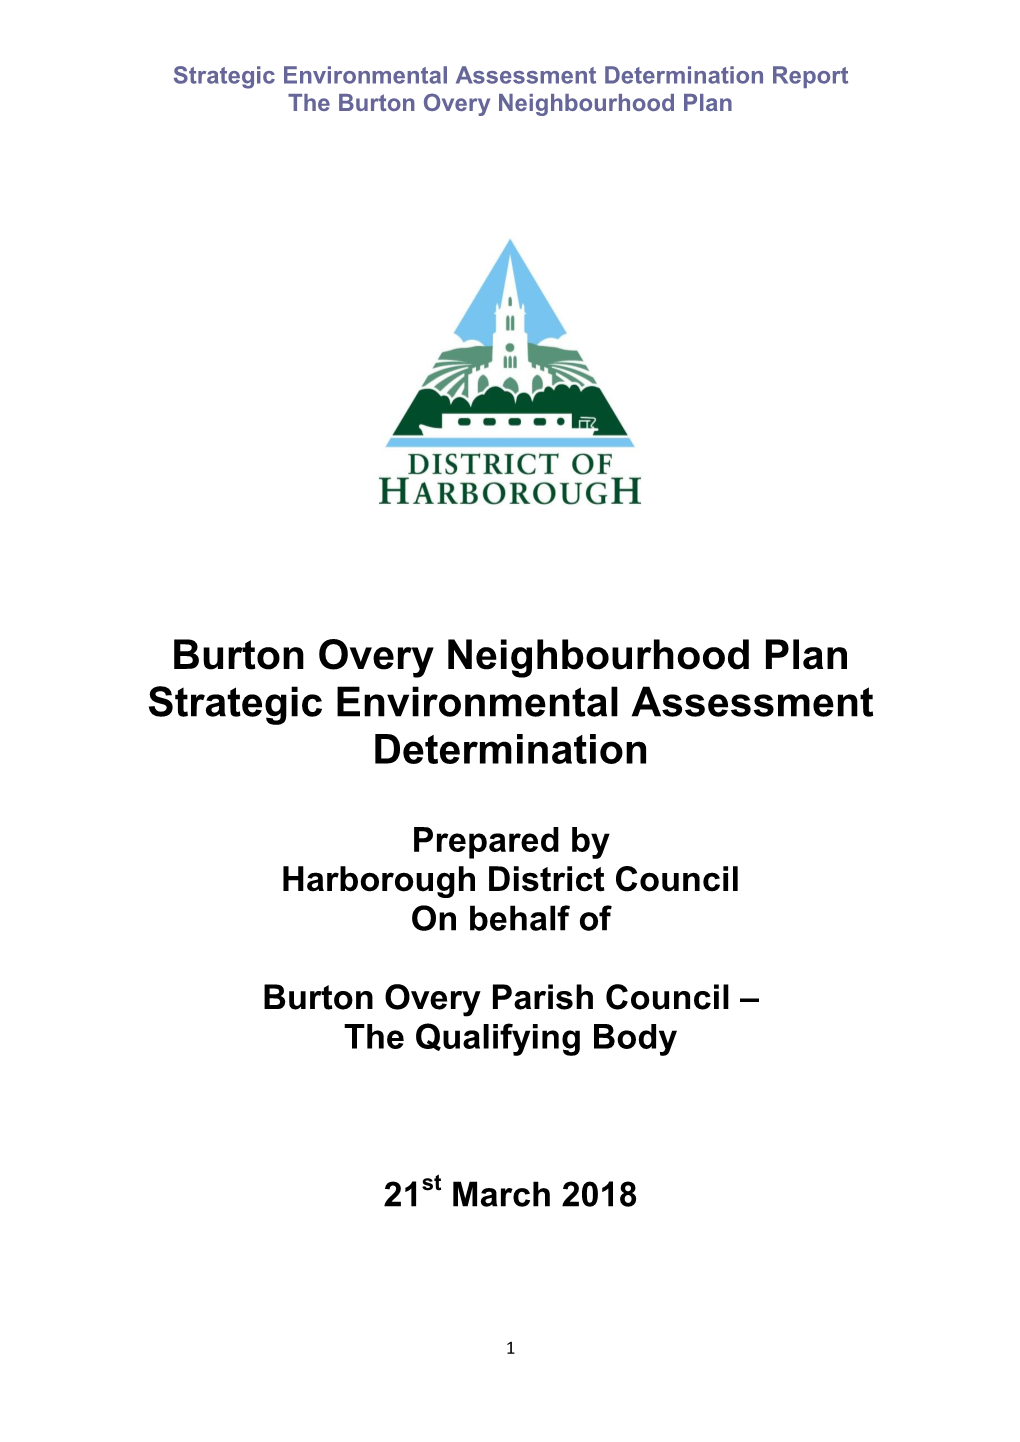 Burton Overy Neighbourhood Plan Strategic Environmental Assessment Determination